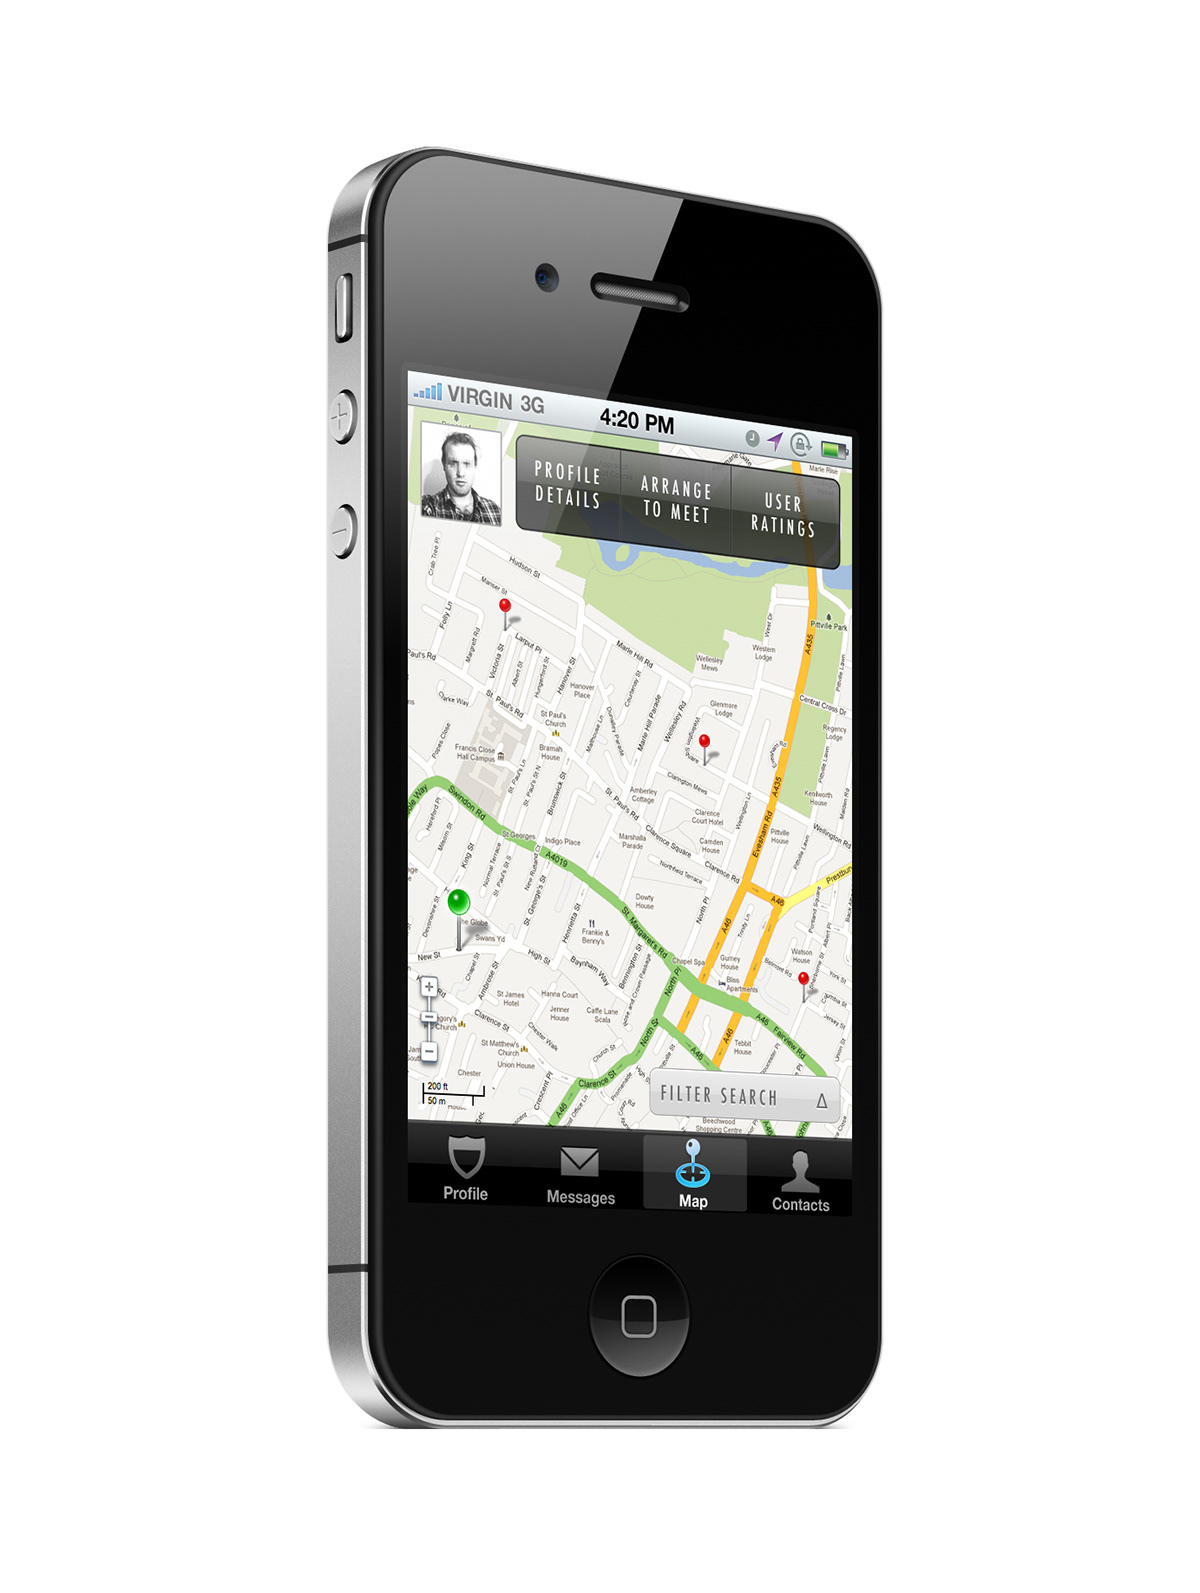 Drug Dealing app iphone design smartphone concept graphic application